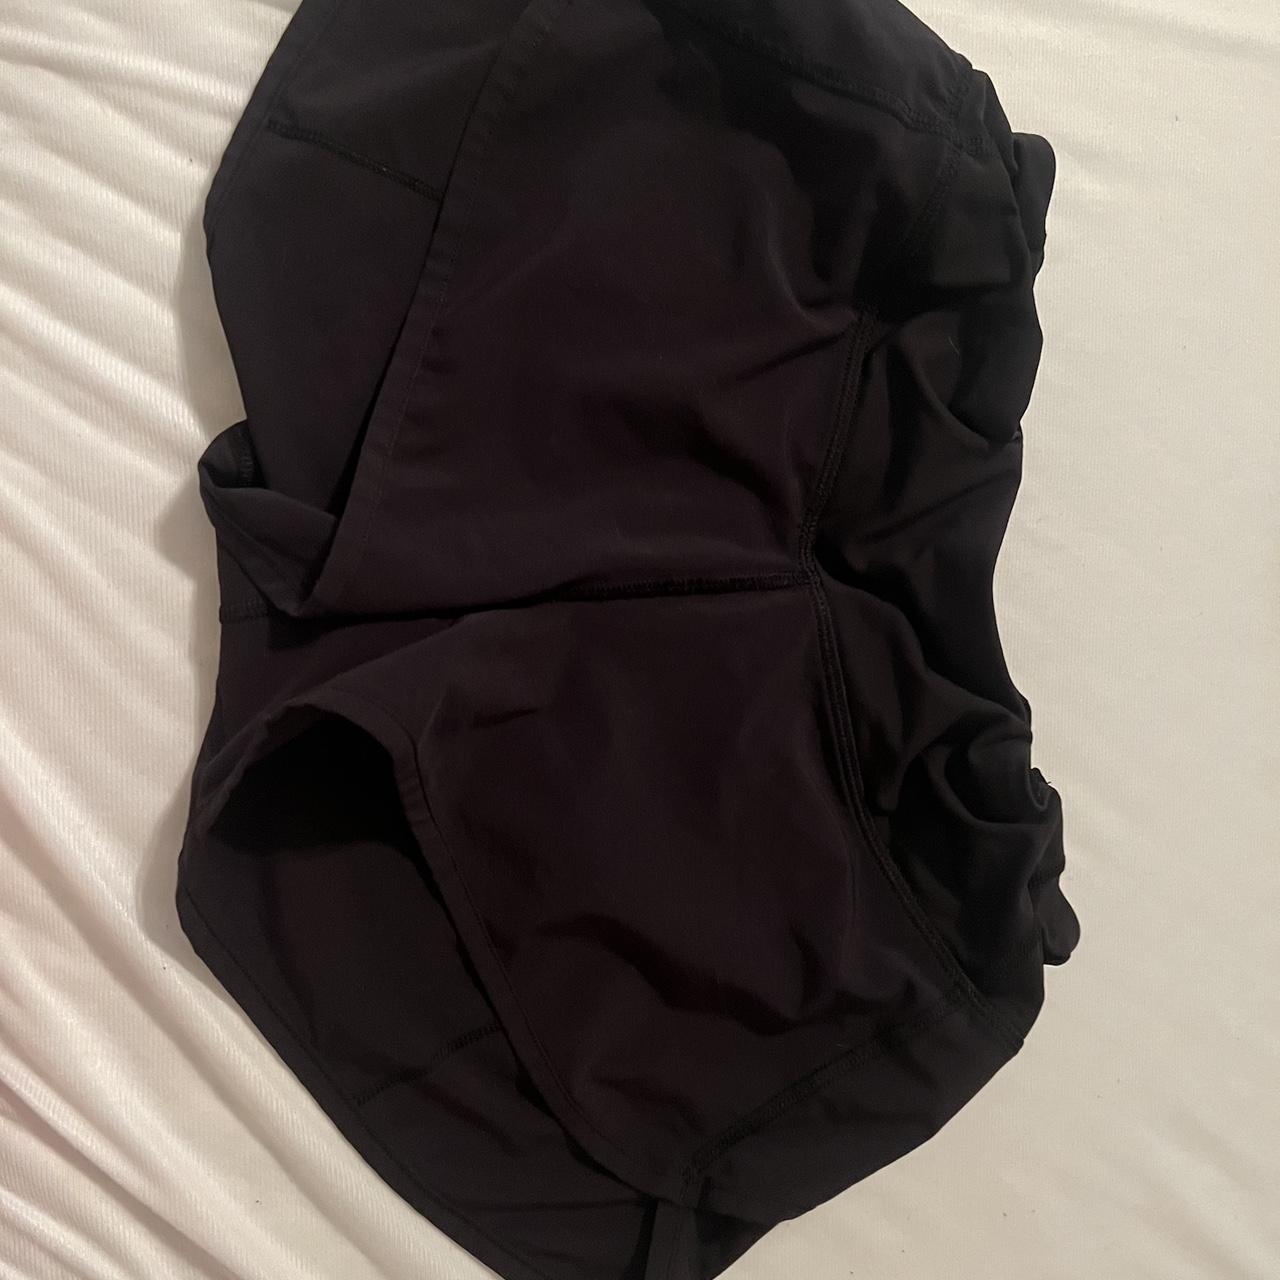 Black Lululemon 2.5 inch speed up shorts - Depop